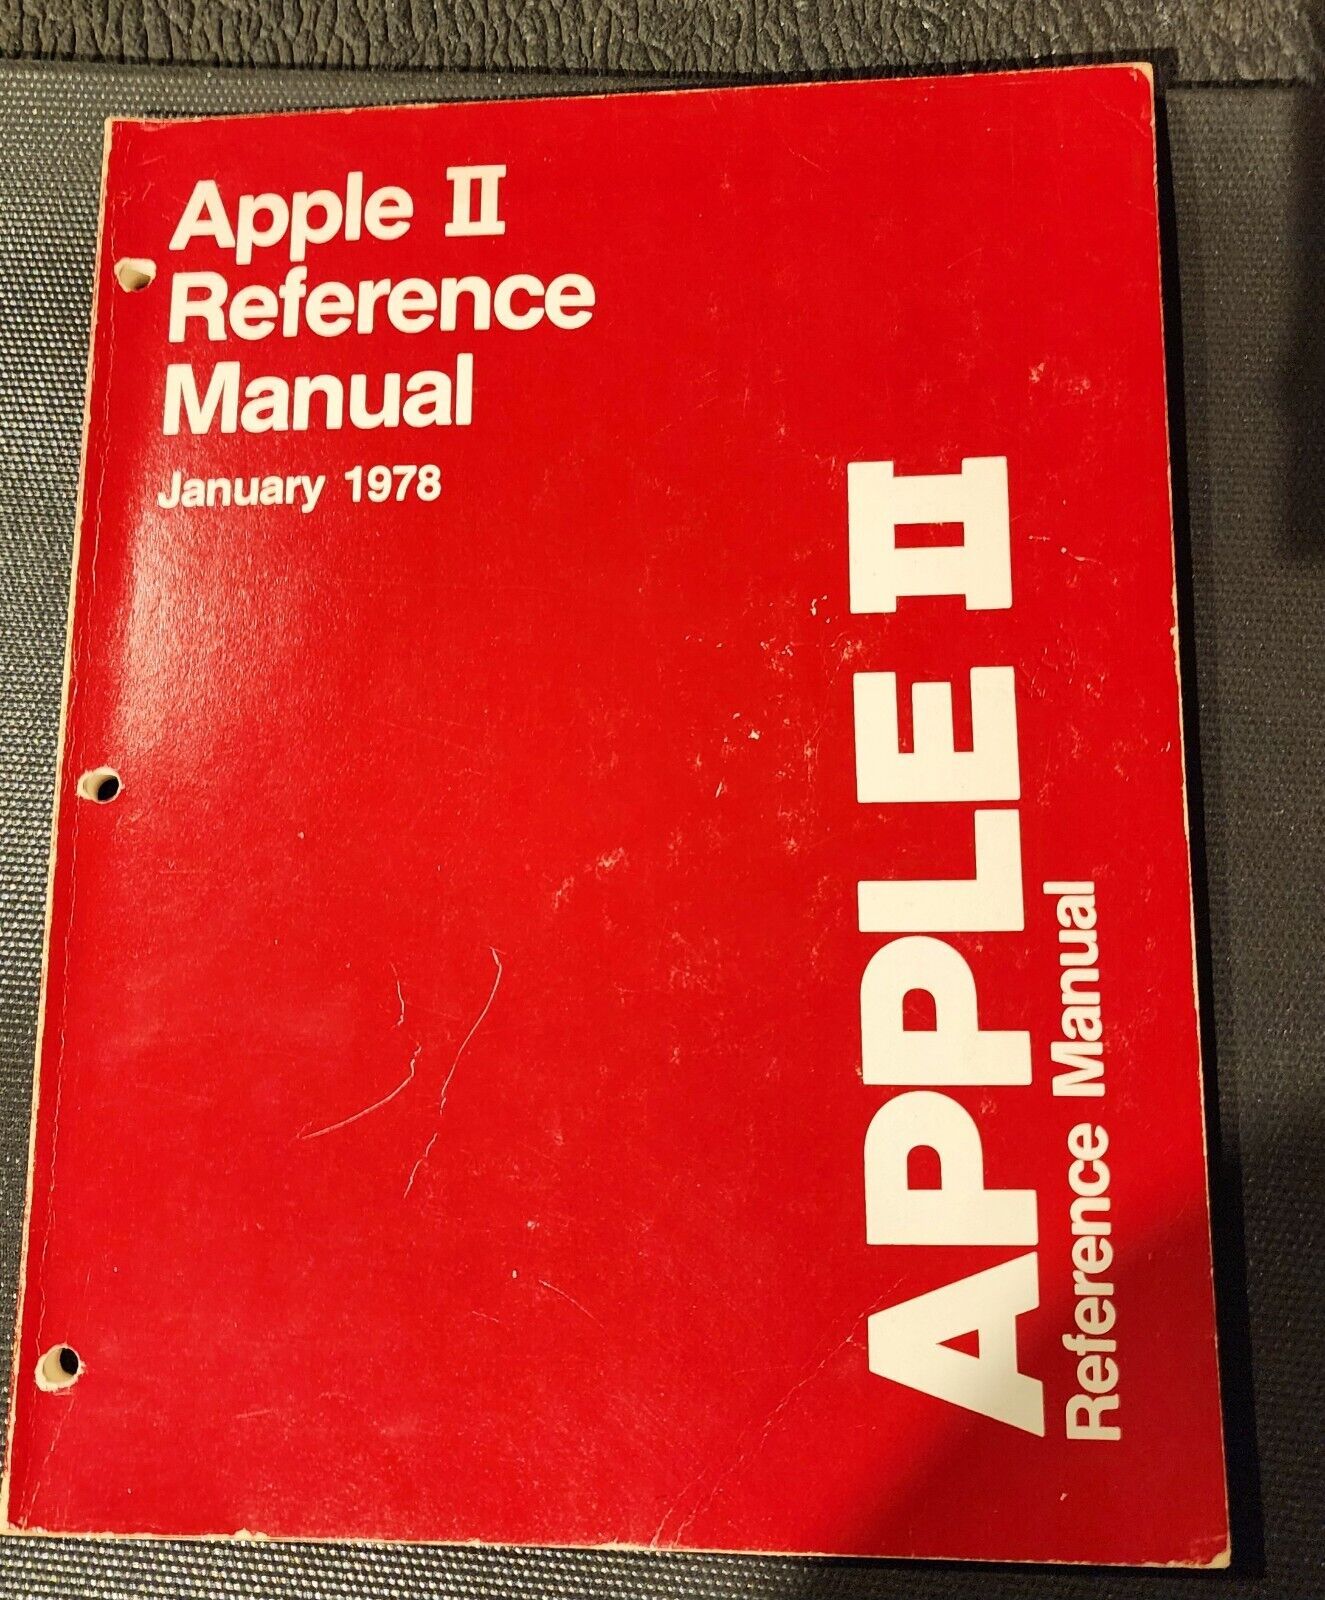 Apple Macintosh Reference Manual Red Book January 1978 Original Vintage RARE